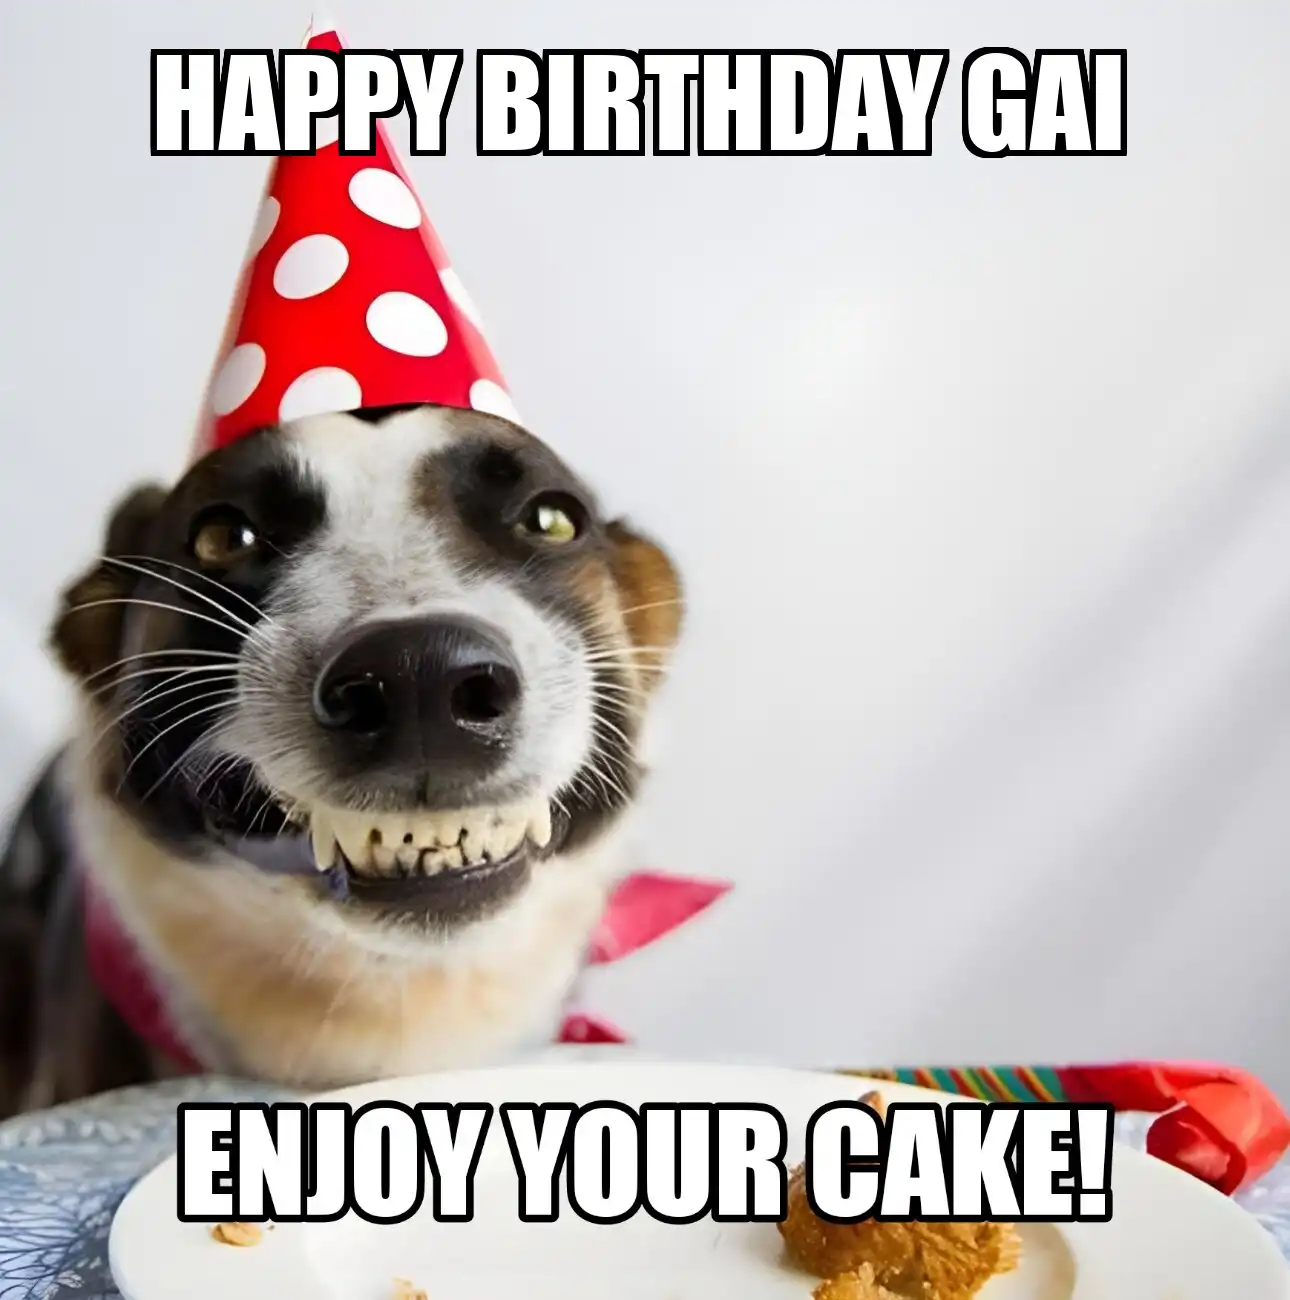 Happy Birthday Gai Enjoy Your Cake Dog Meme